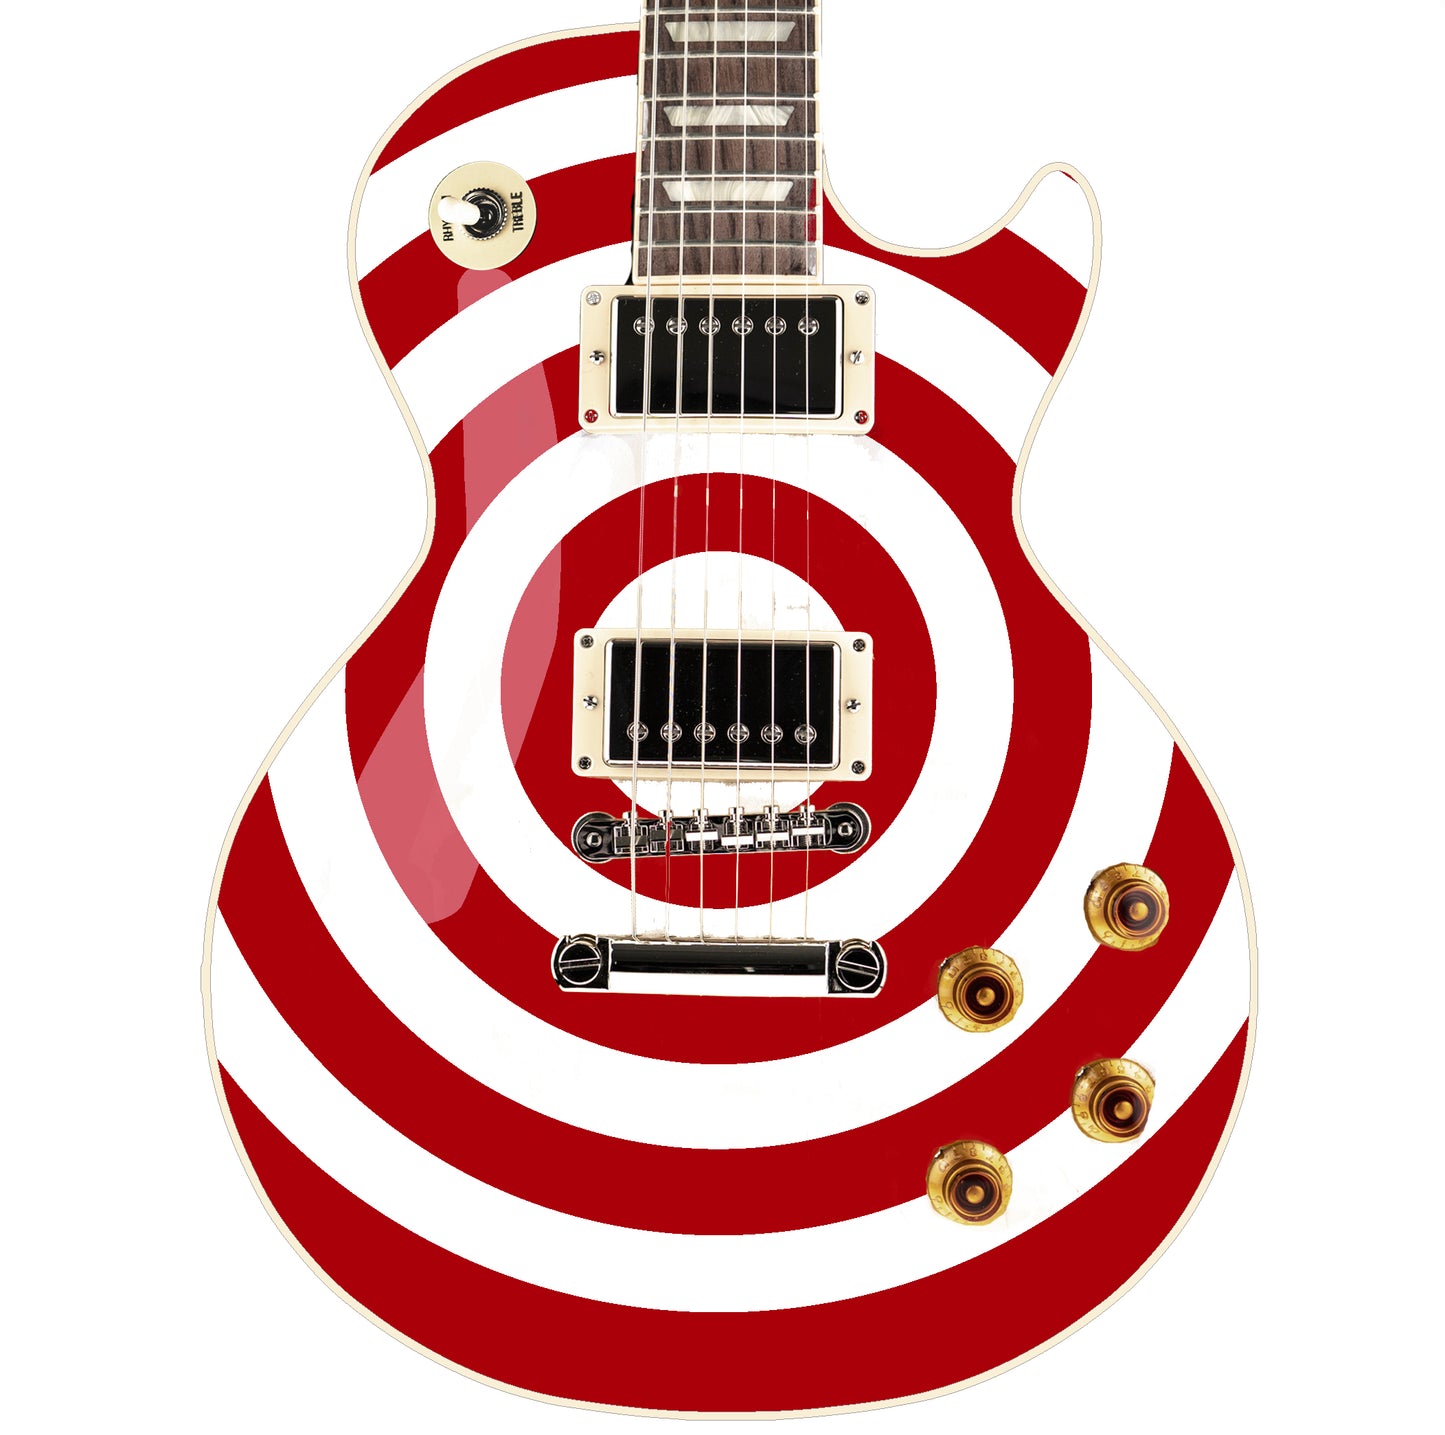 Bullseye Guitar Laminated Skin Wrap Vinyl Decal Stickers Guitar/Bass. White & Red GS37